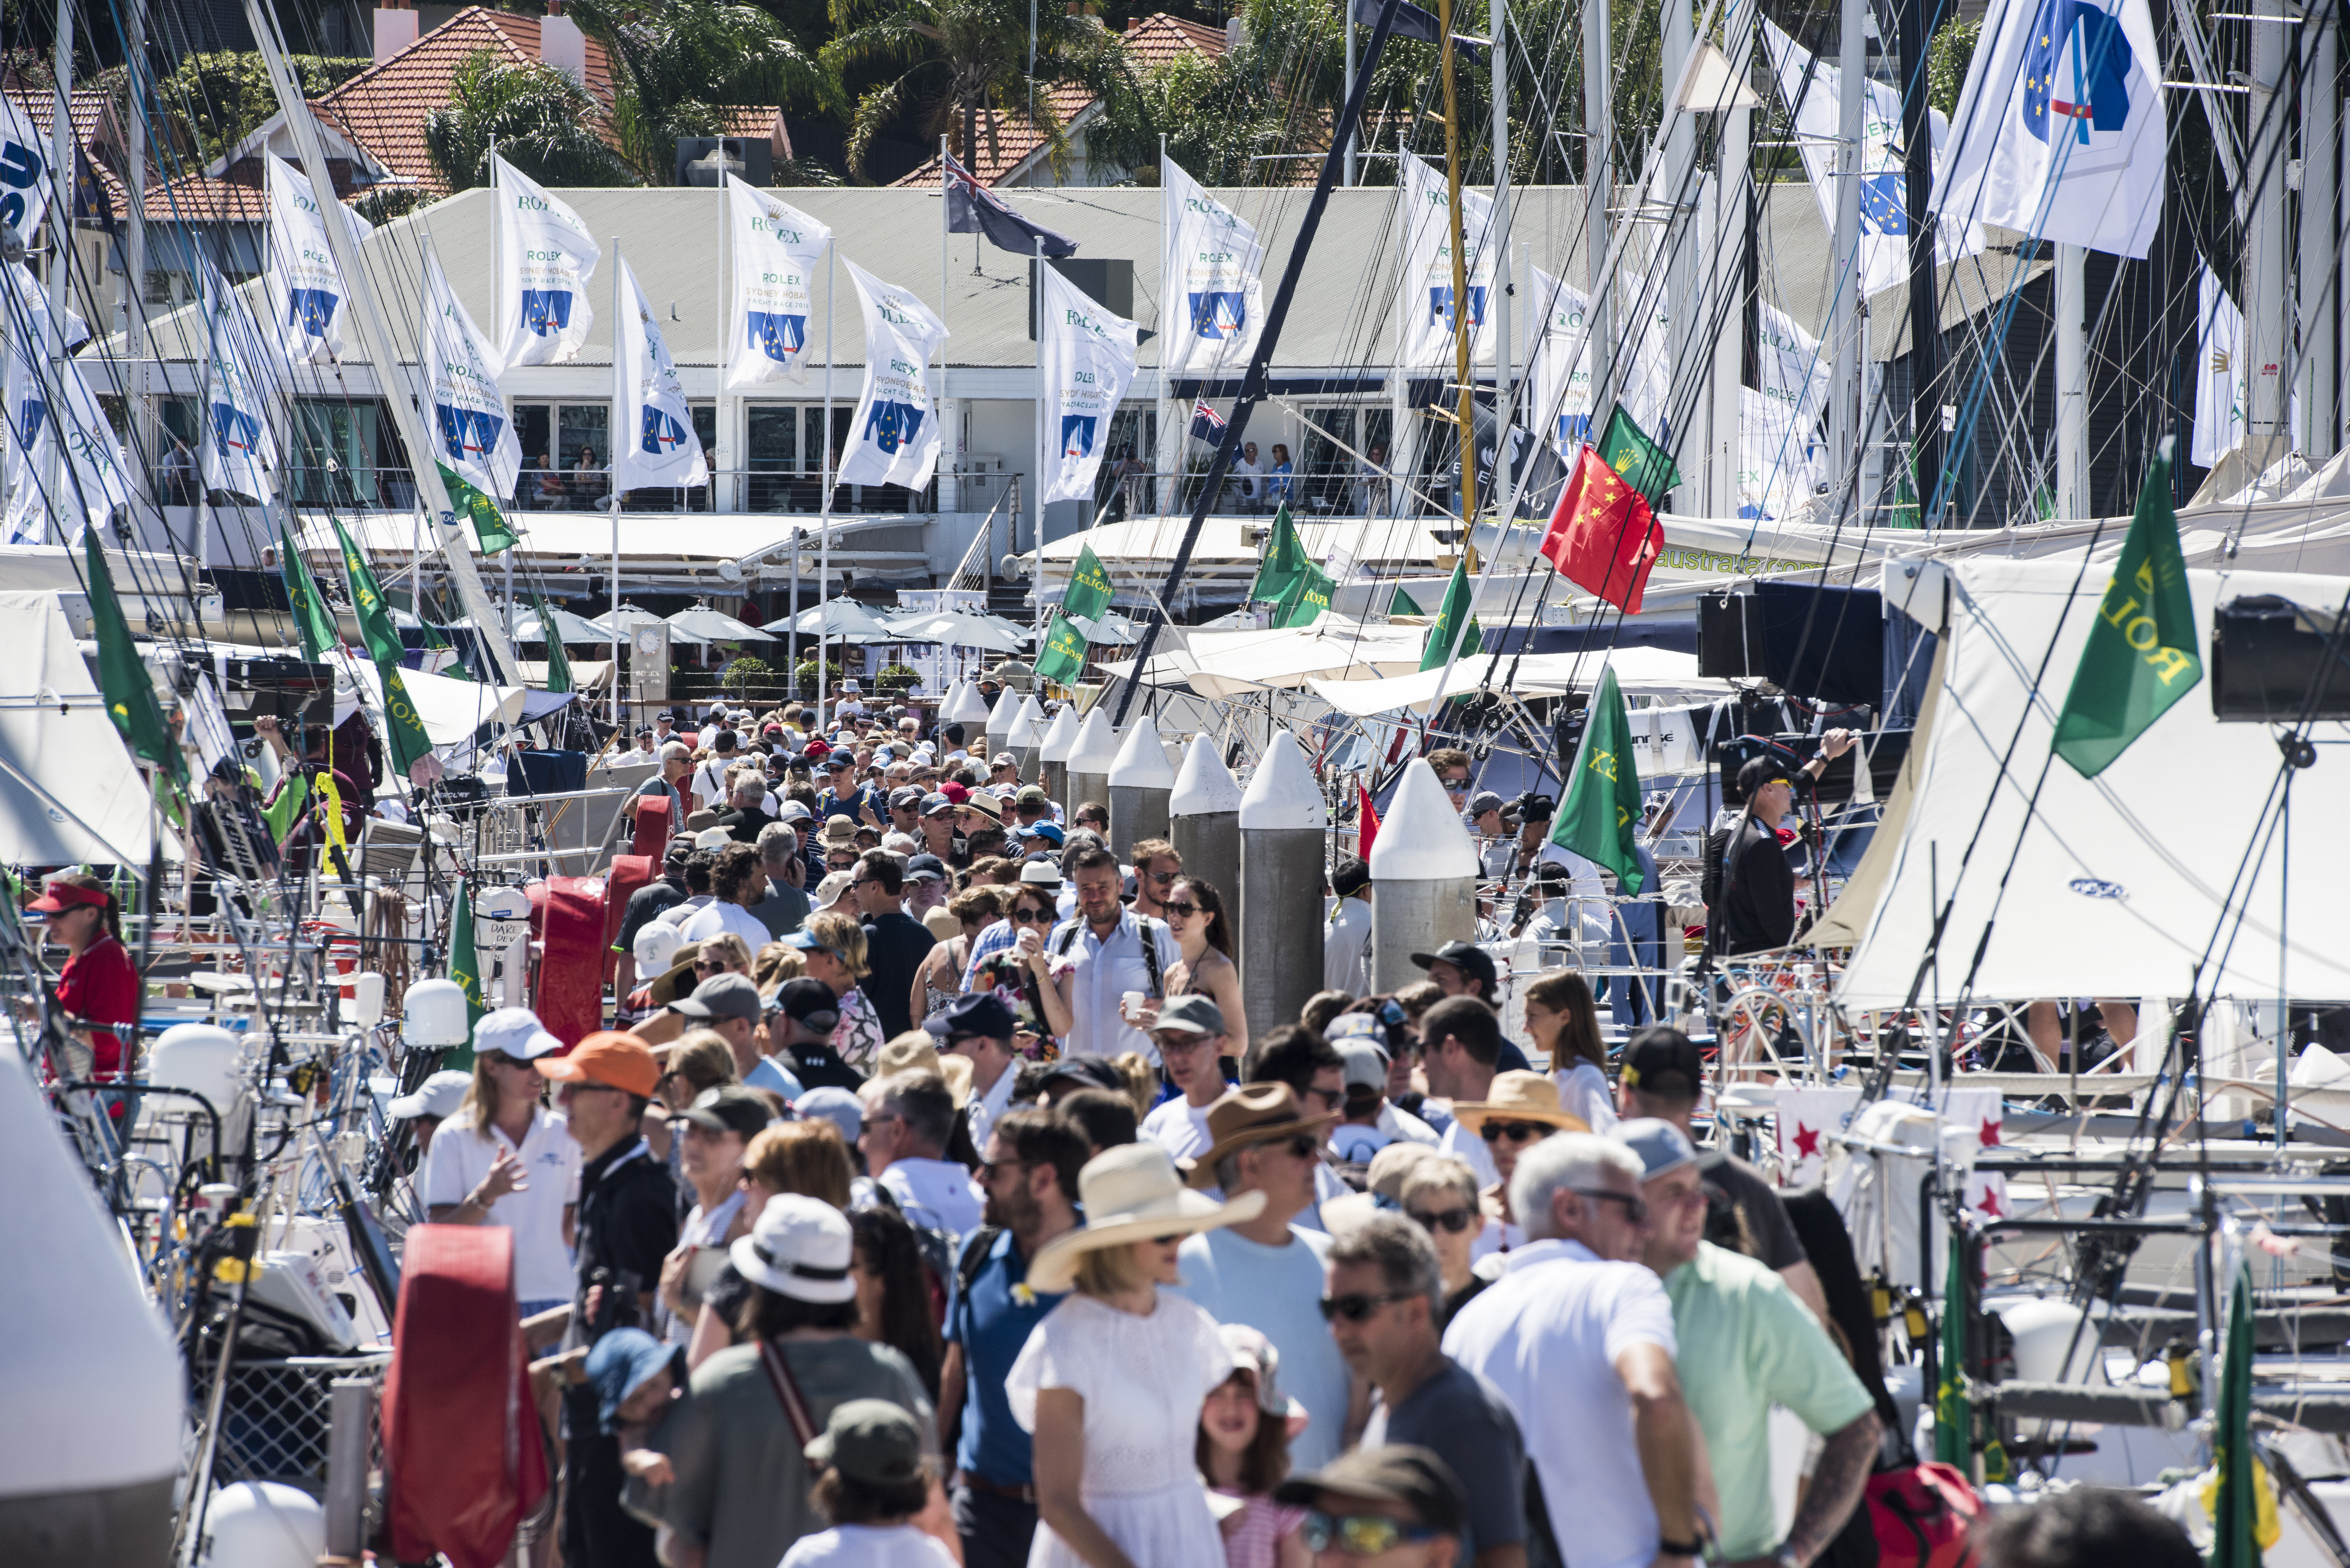 Dockside preparations shortly ahead of the 2016 Rolex Sydney Hobart Yacht Race start